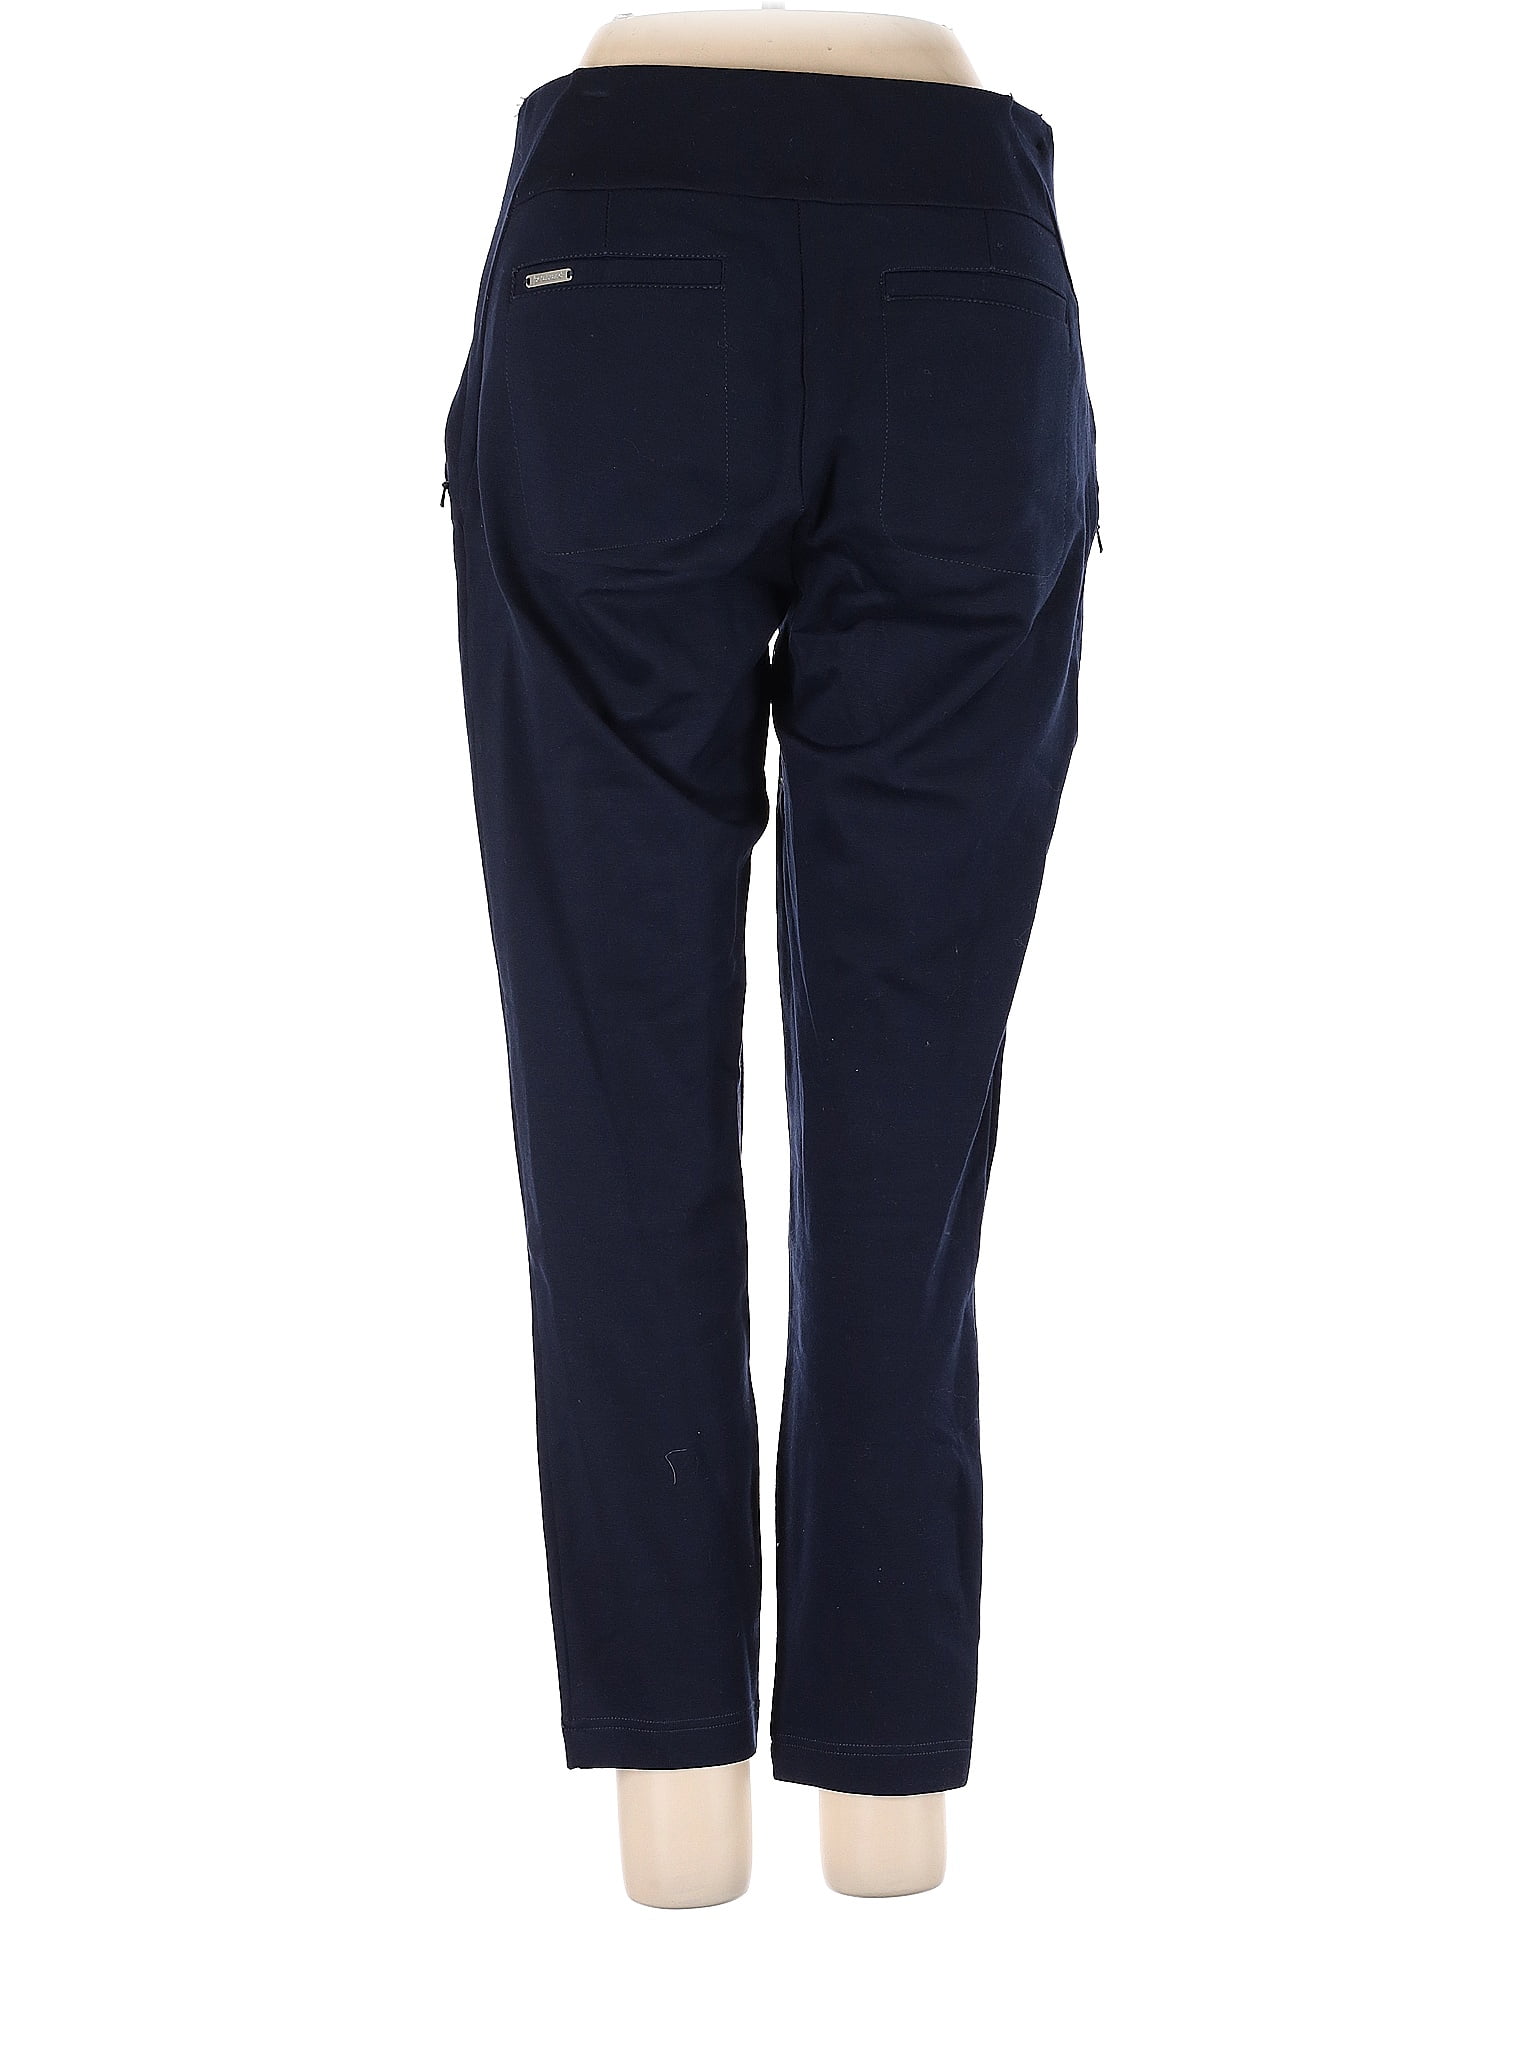 Halara Navy Blue Casual Pants Size L (Petite) - 57% off